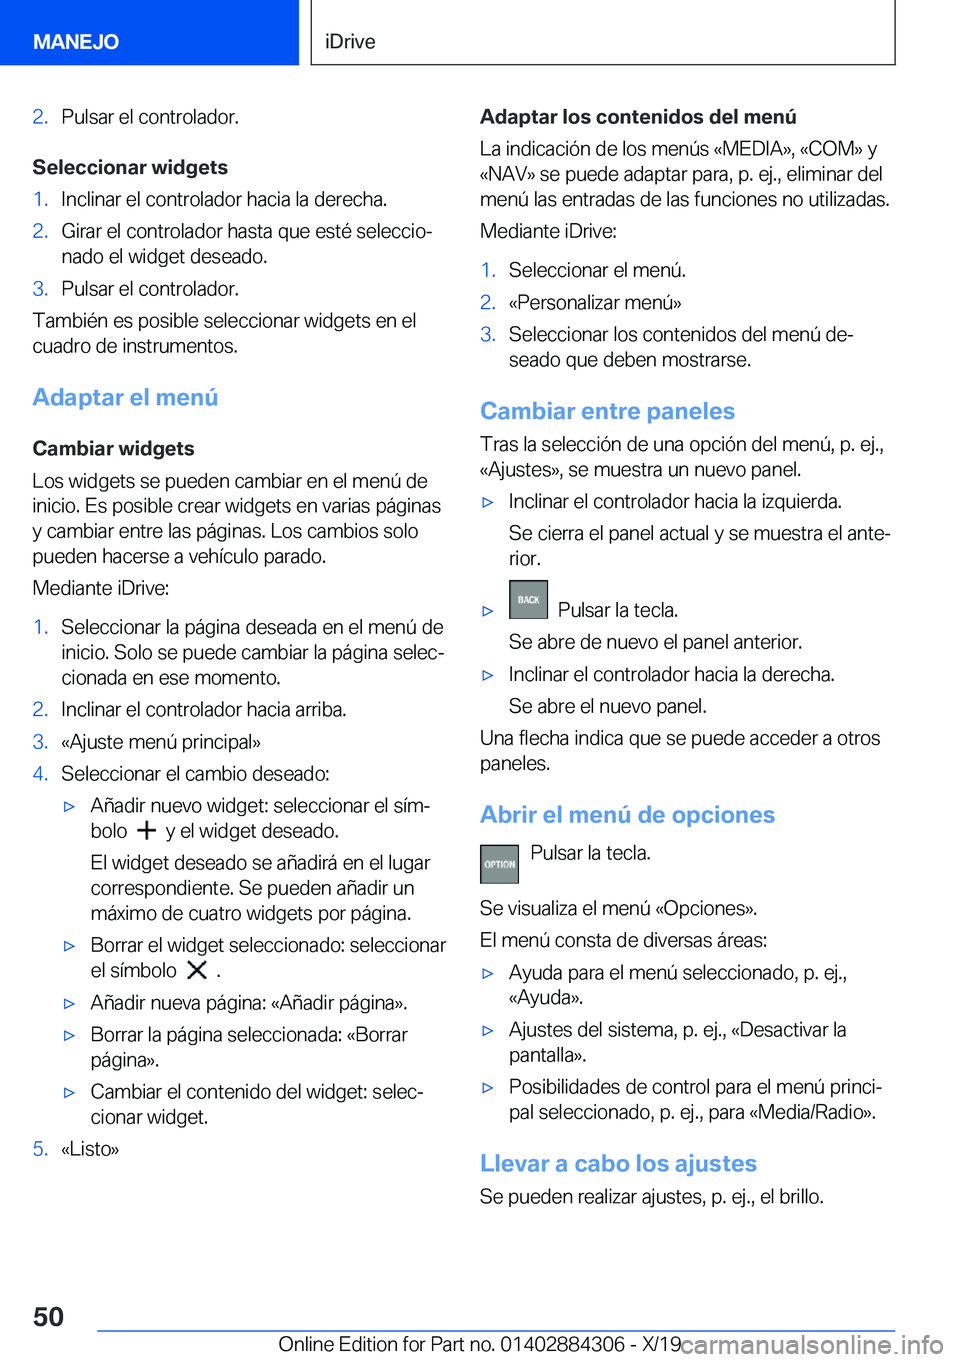 BMW 8 SERIES GRAN COUPE 2020  Manuales de Empleo (in Spanish) �2�.�P�u�l�s�a�r��e�l��c�o�n�t�r�o�l�a�d�o�r�.
�S�e�l�e�c�c�i�o�n�a�r��w�i�d�g�e�t�s
�1�.�I�n�c�l�i�n�a�r��e�l��c�o�n�t�r�o�l�a�d�o�r��h�a�c�i�a��l�a��d�e�r�e�c�h�a�.�2�.�G�i�r�a�r��e�l��c�o